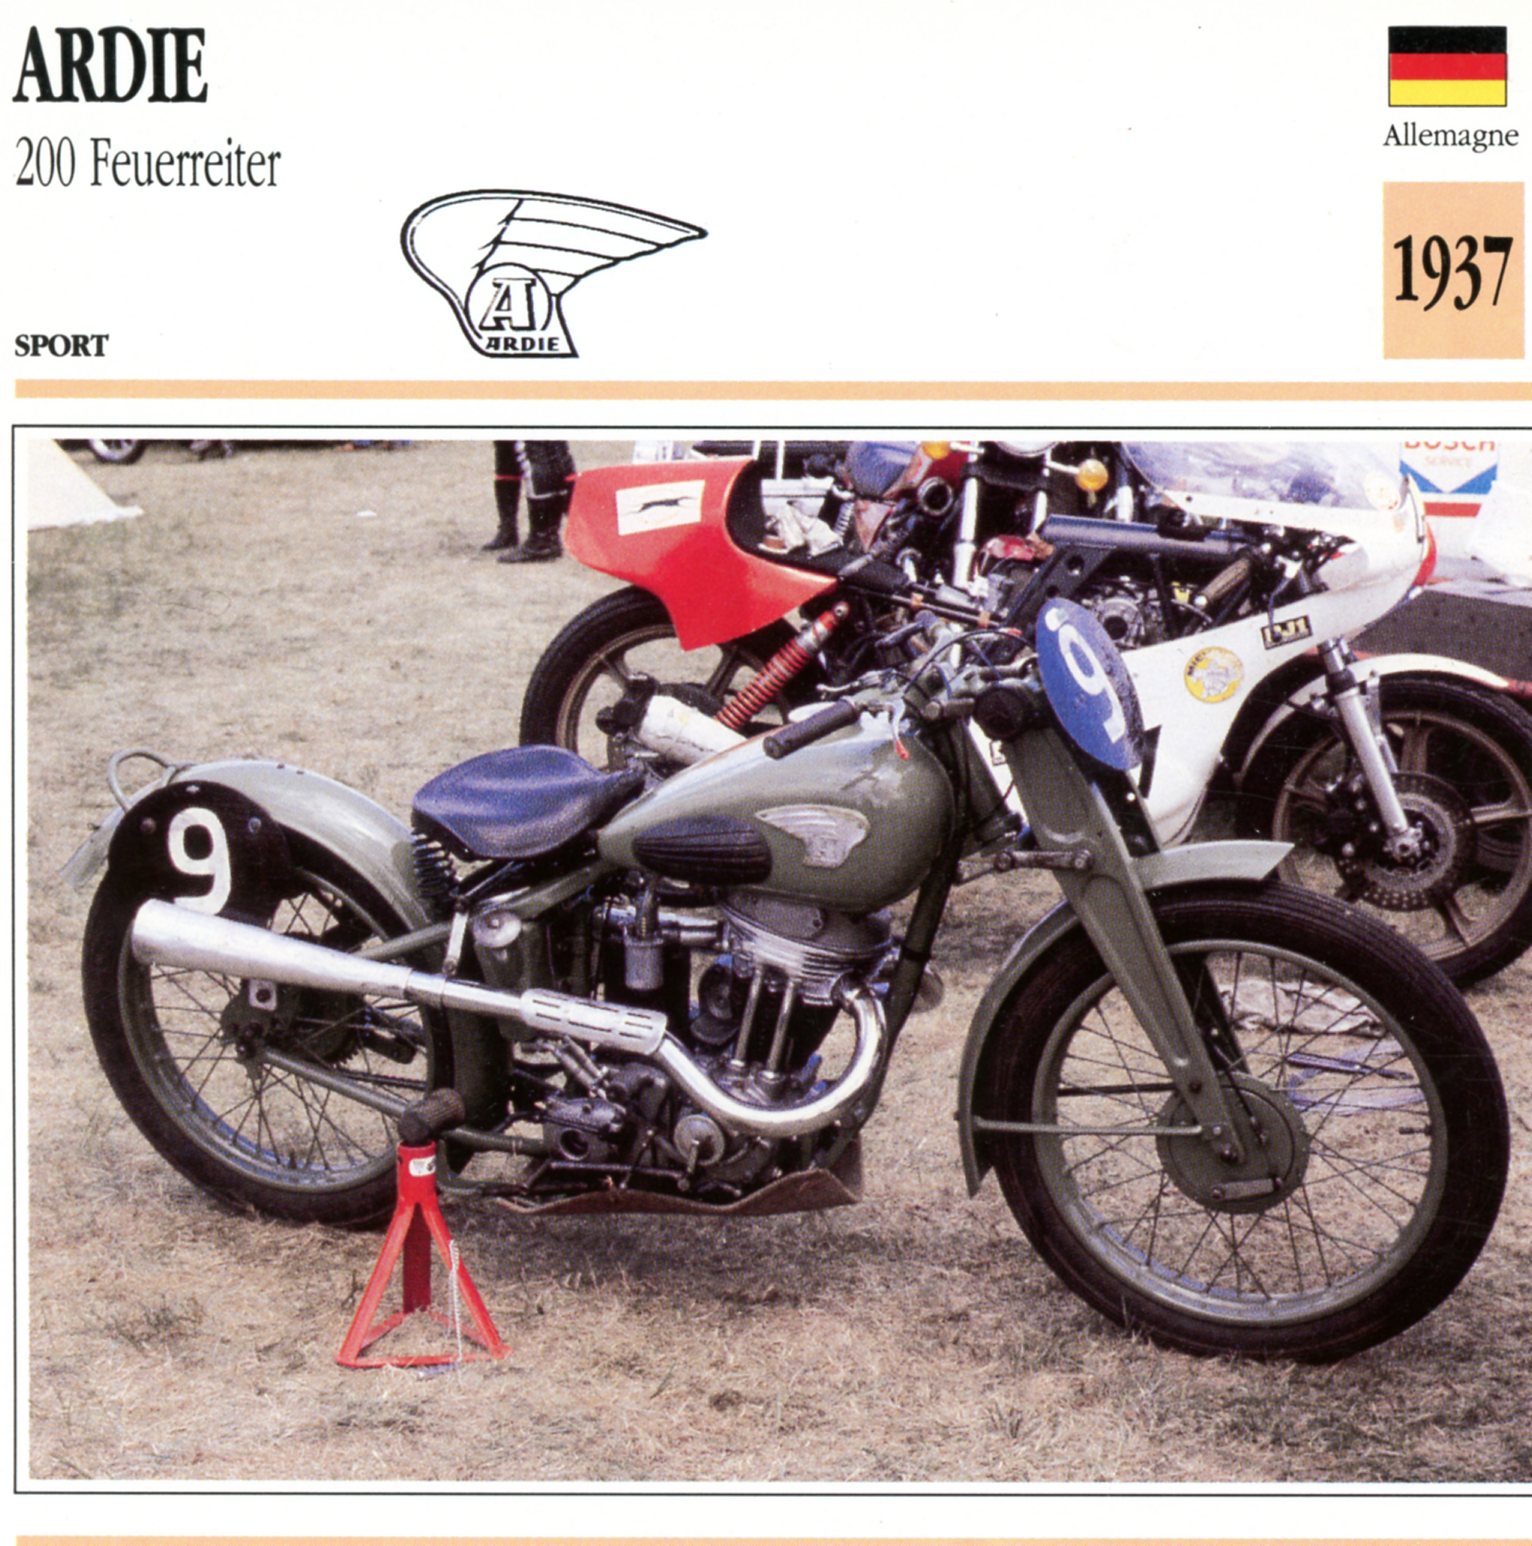 ARDIE 200 FEUERREITER 1937 - CARTE CARD FICHE MOTO CARACTERISTIQUES